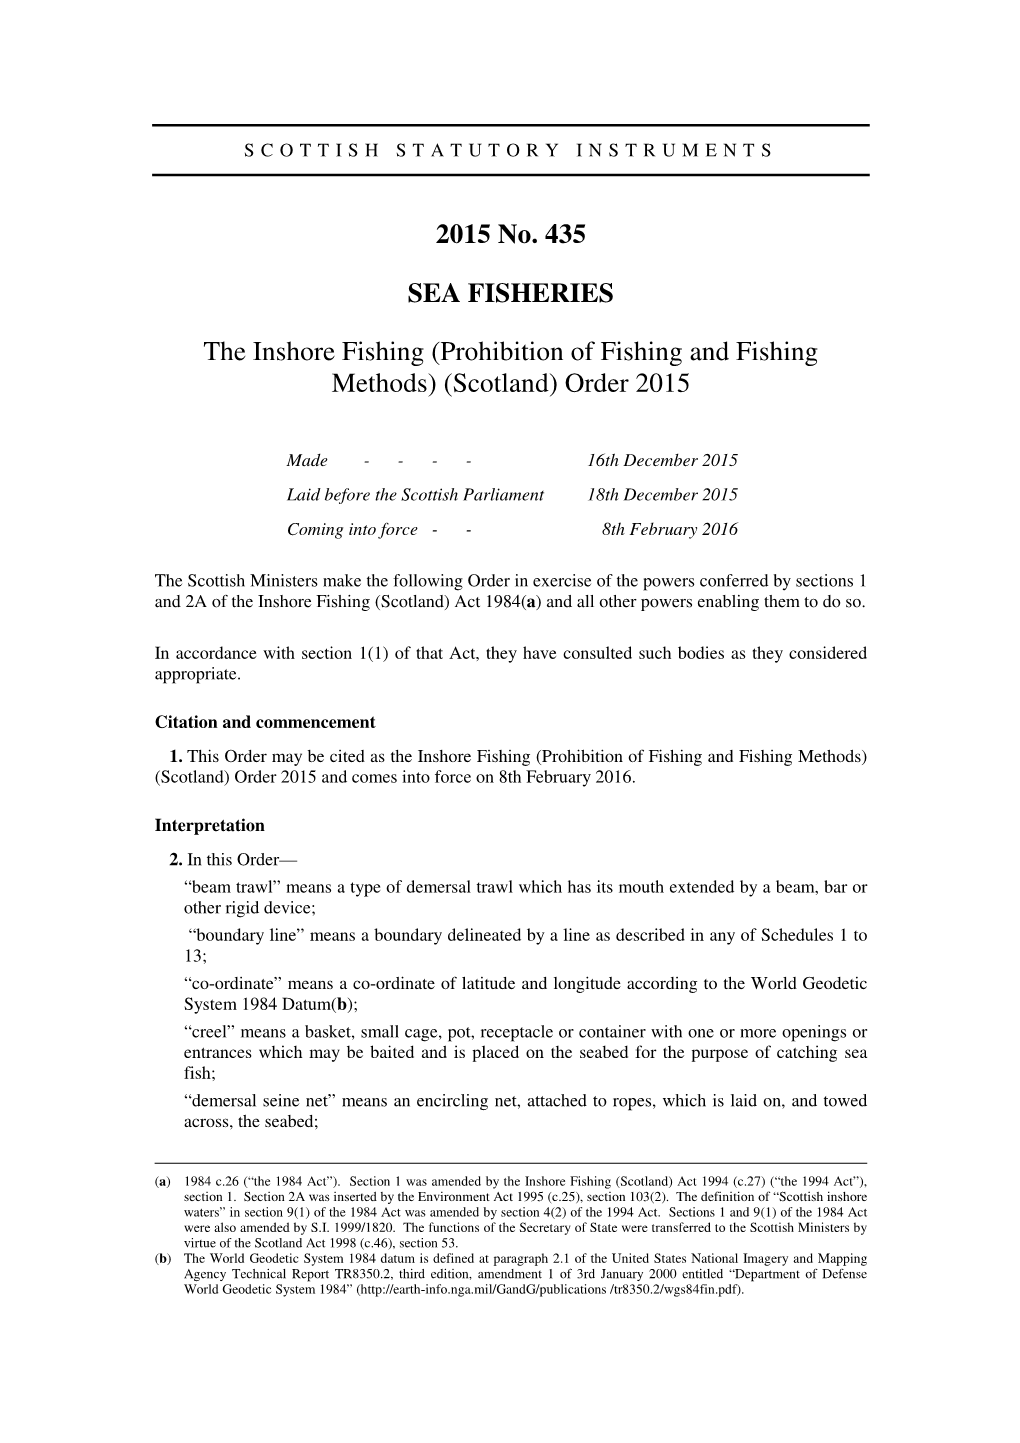 (Prohibition of Fishing and Fishing Methods) (Scotland) Order 2015